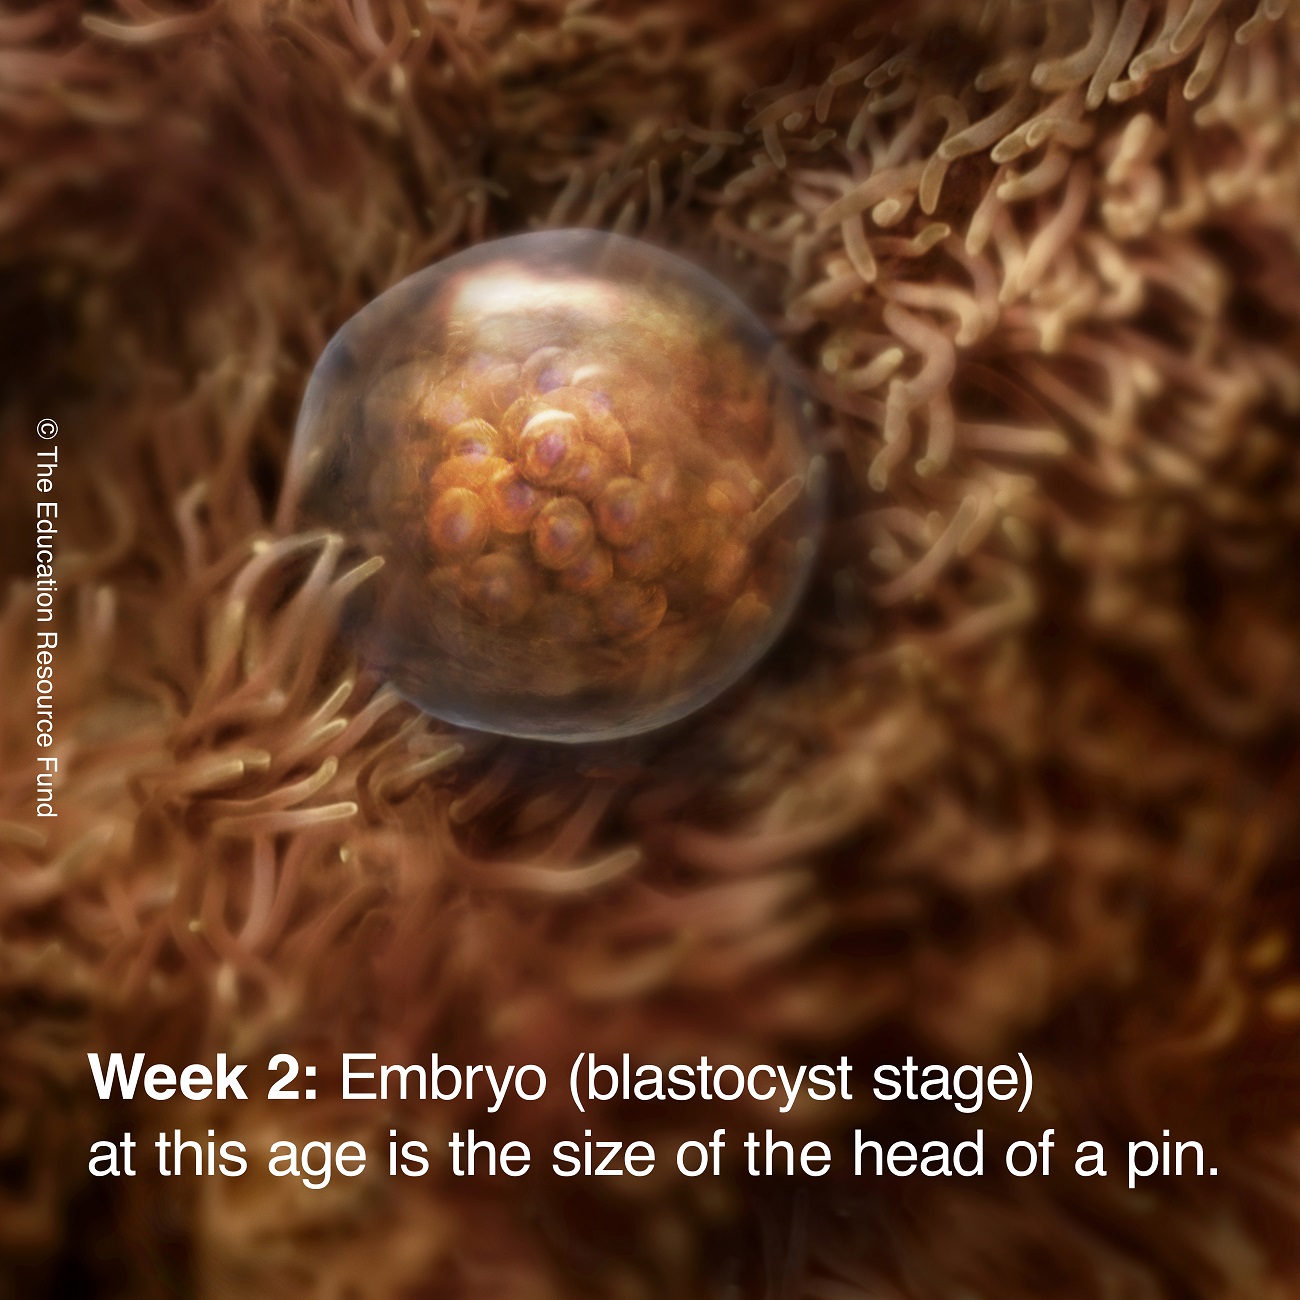 Embryo alive in the uterus in the second week following fertilization